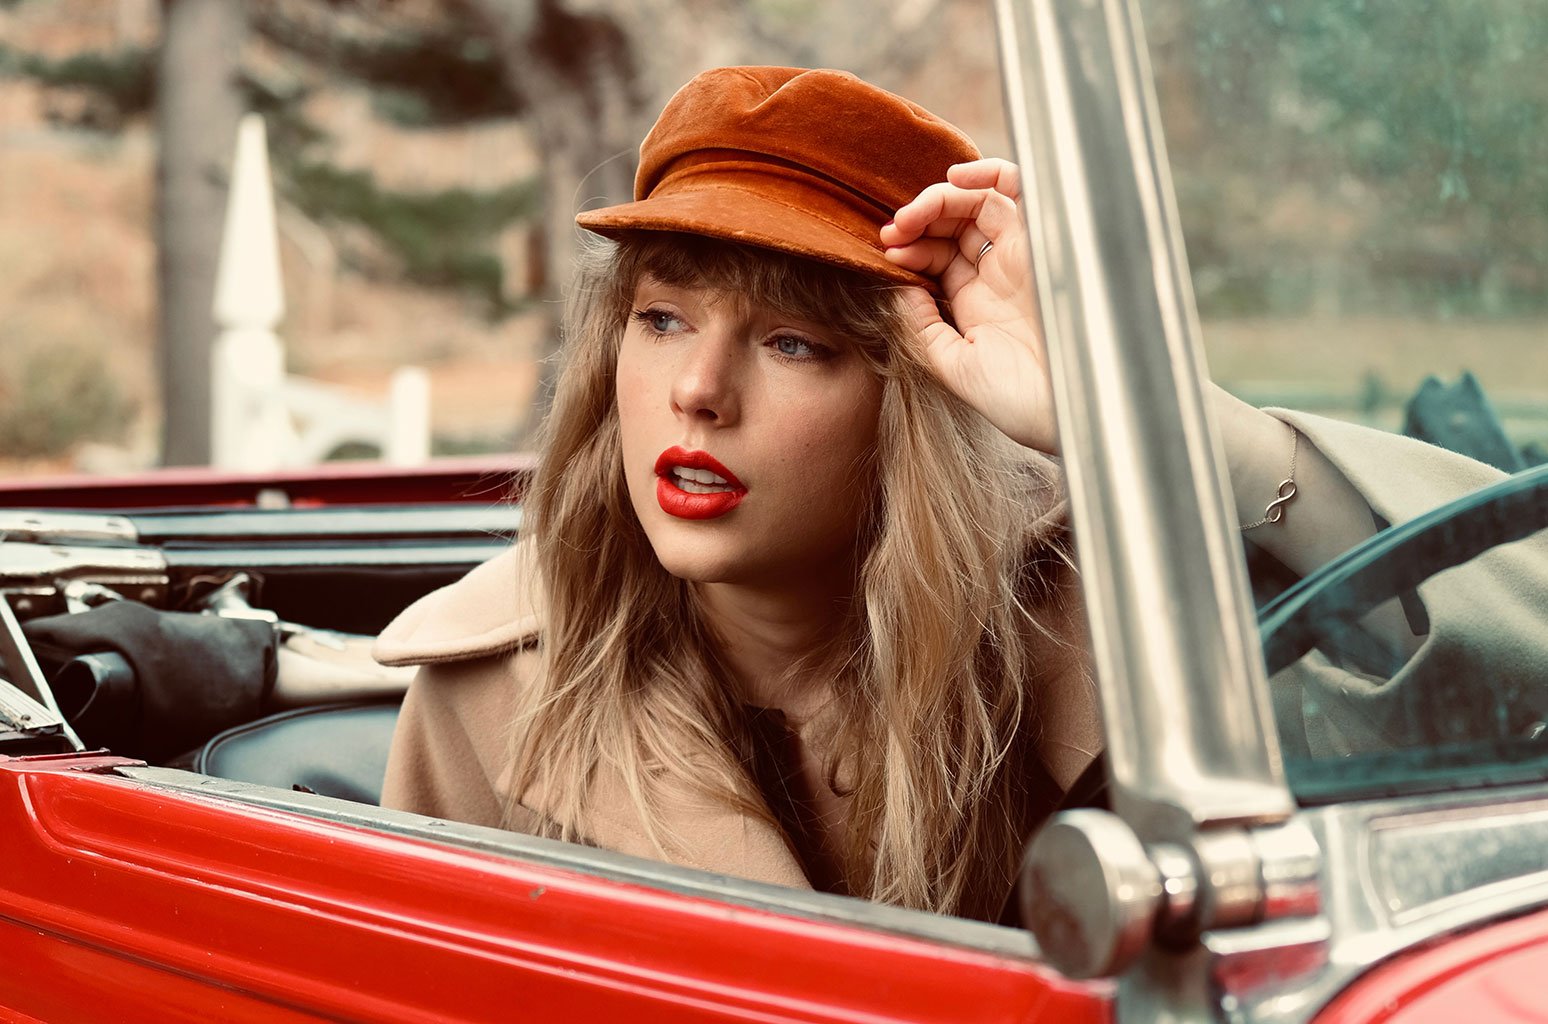 Taylor-Swift-red-cr-Beth-Garrabrant-press-2021-billboard-1548-1636735410.jpg